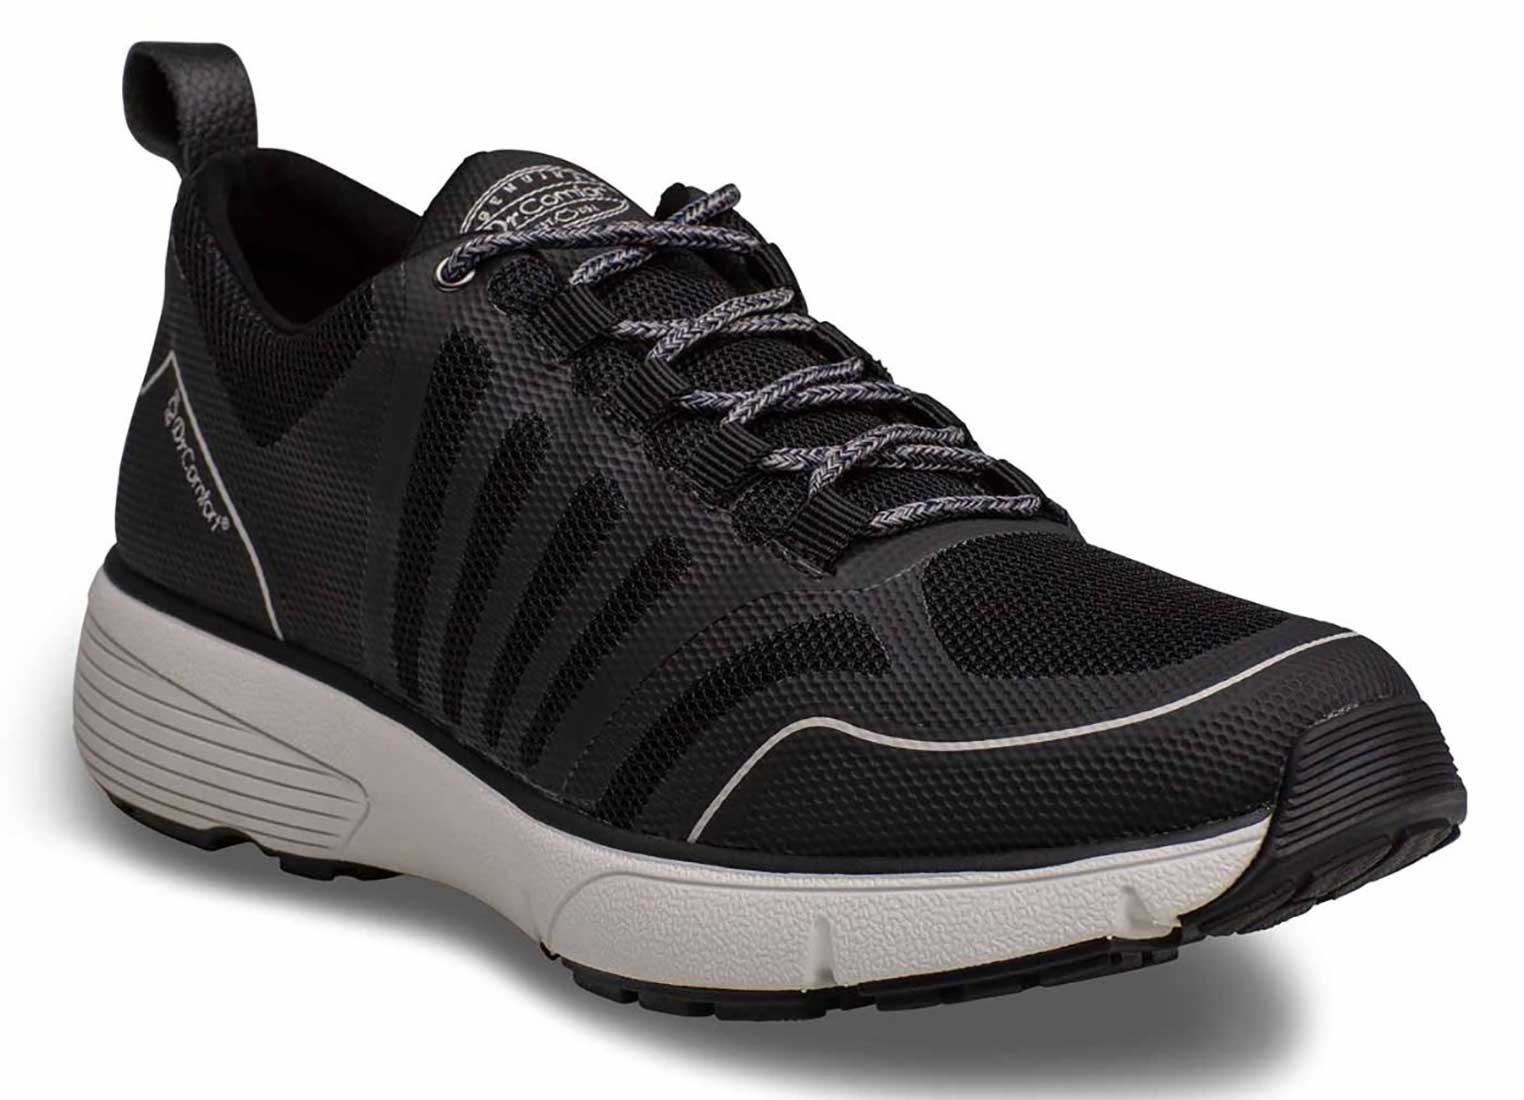 Dr. Comfort Shoes Gordon X - Men's Comfort Athletic Orthopedic Diabetic Shoe With Gel Plus Inserts - Double Depth - Extra Wide